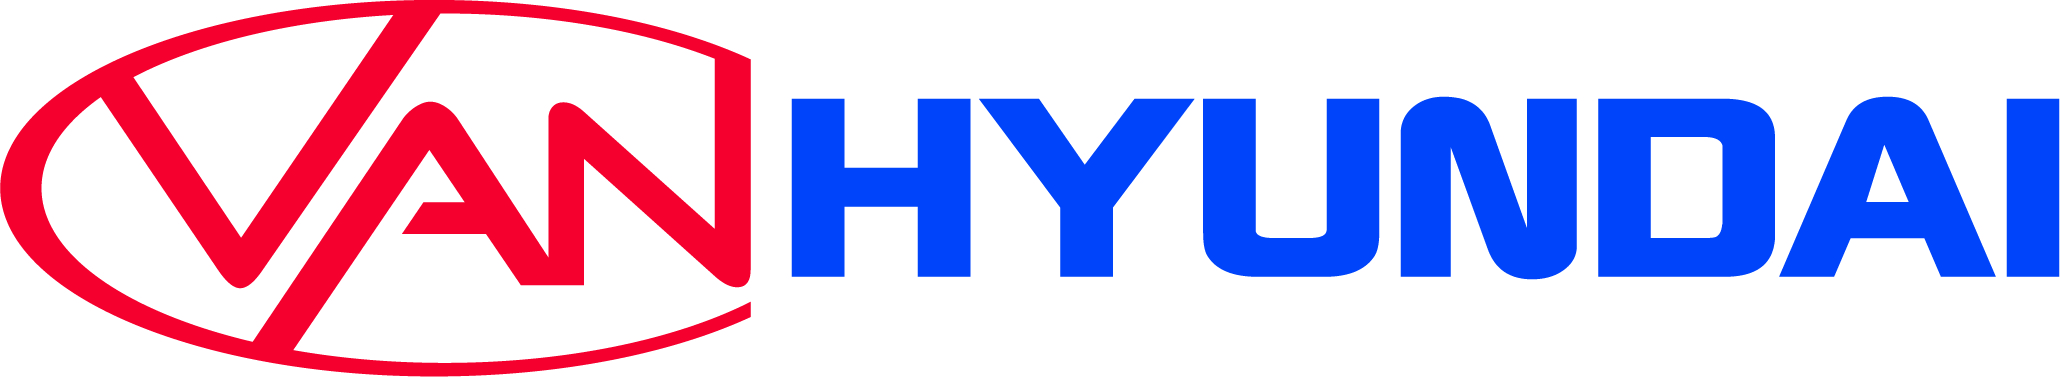 VanHyundai_Compliant_Logo_CMYK